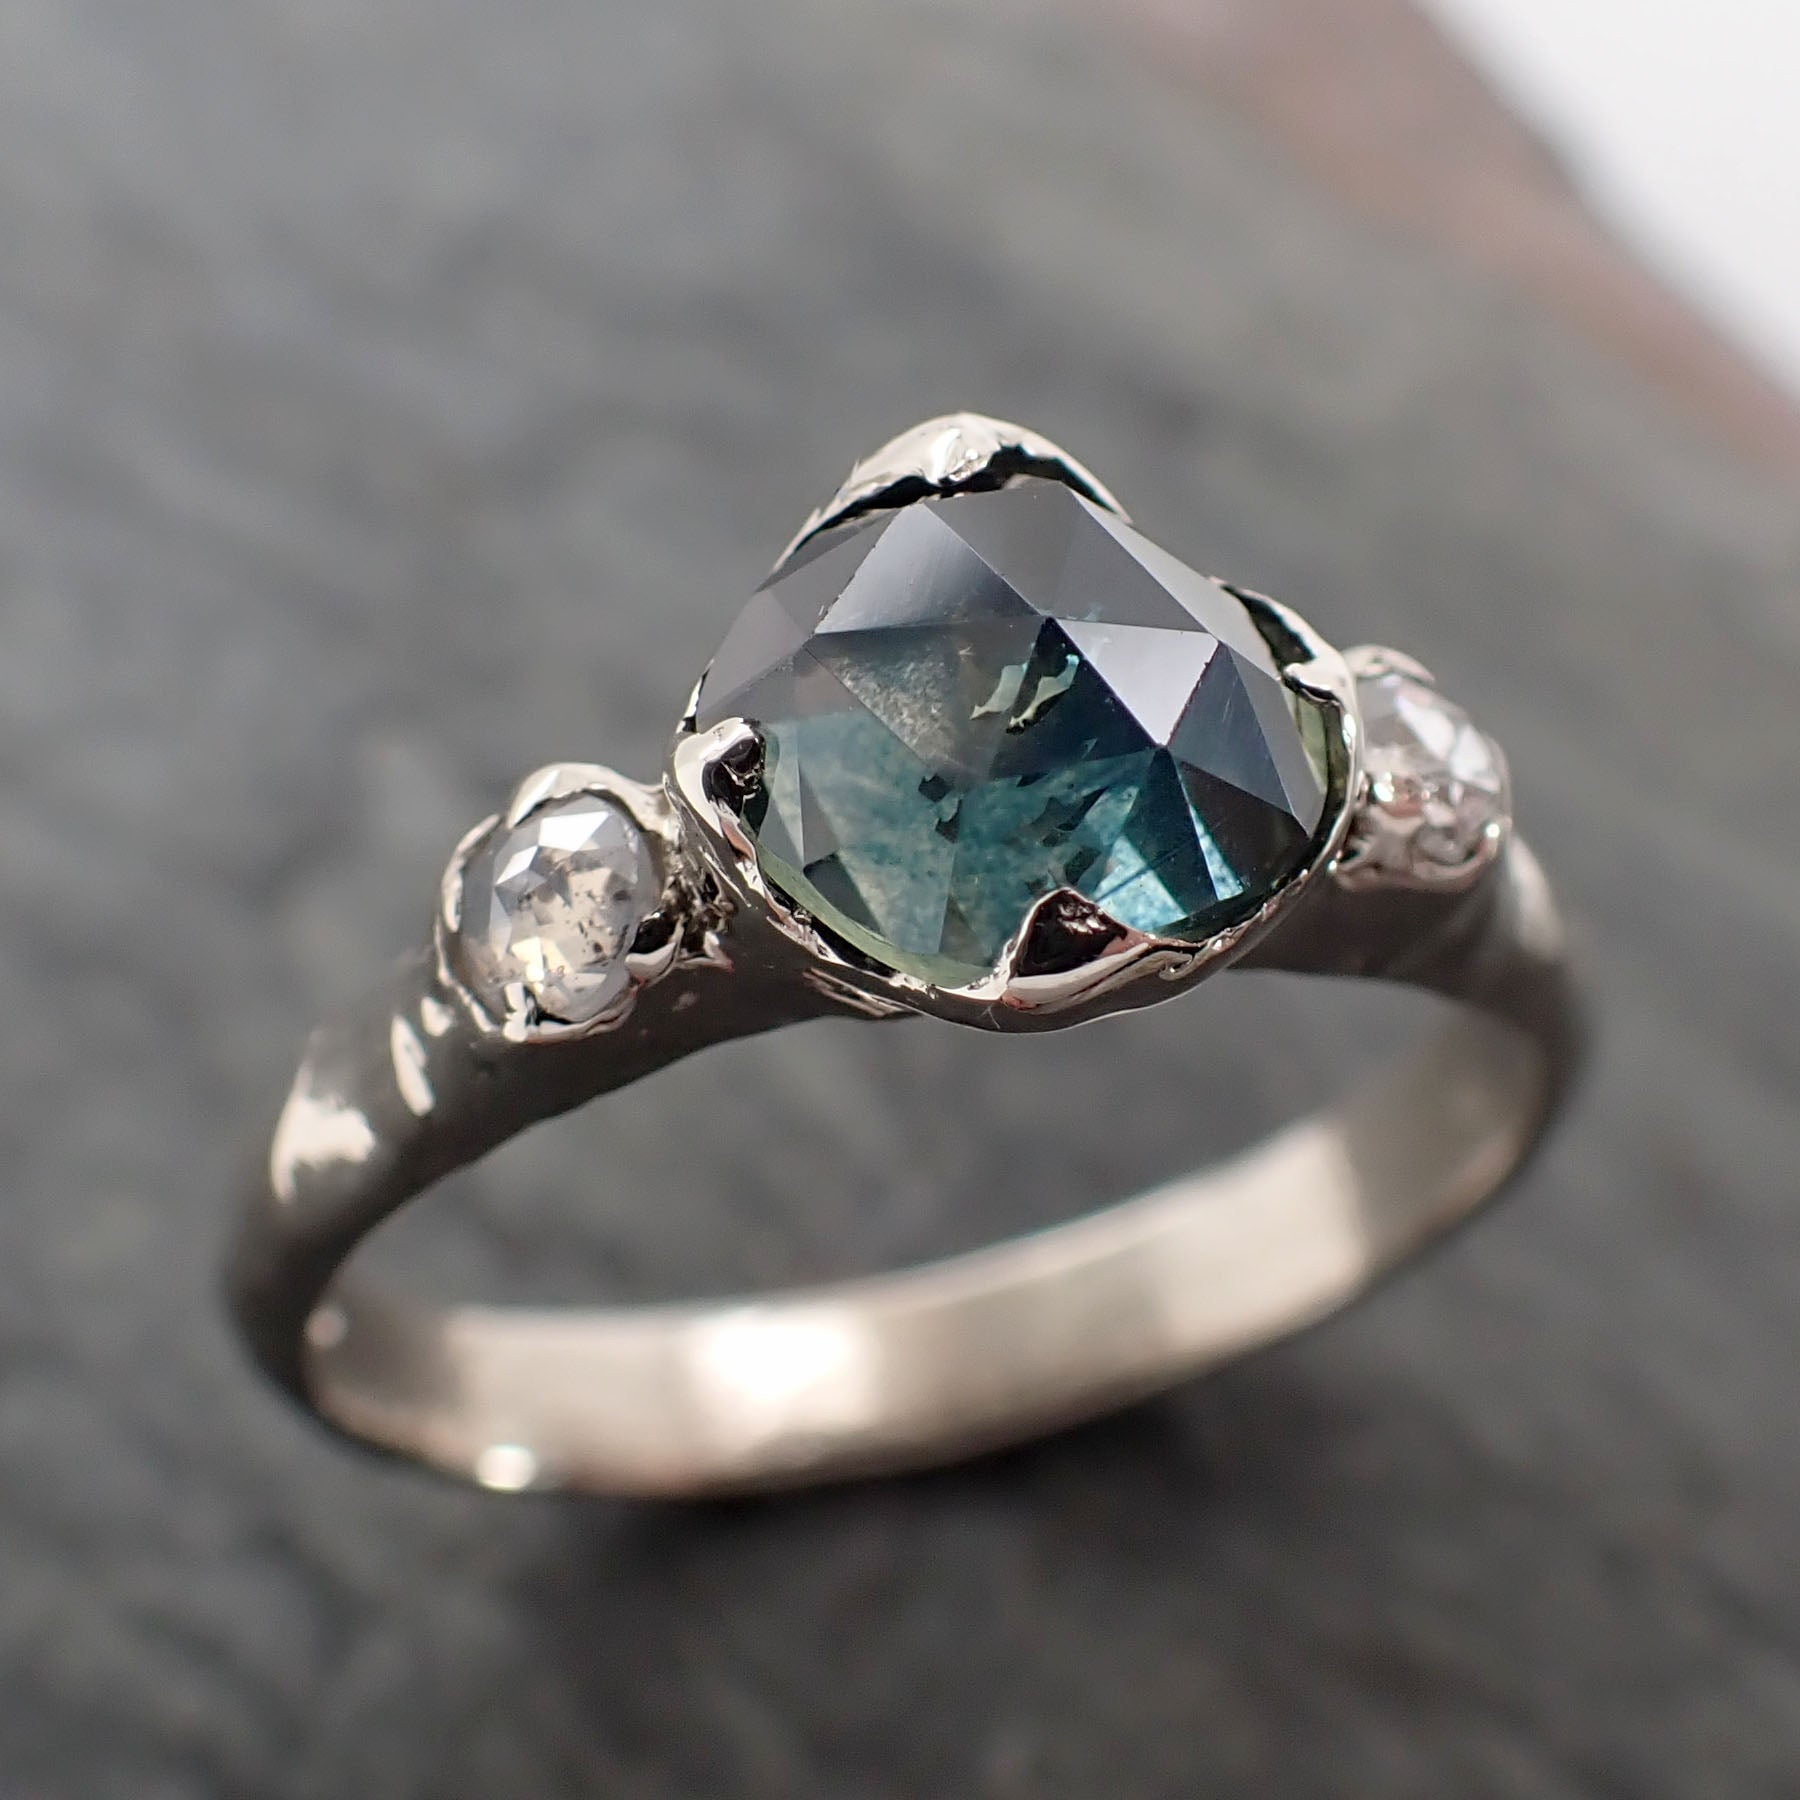 fancy cut montana sapphire diamond 14k white gold engagement ring wedding ring blue gemstone ring multi stone ring 2829 Alternative Engagement